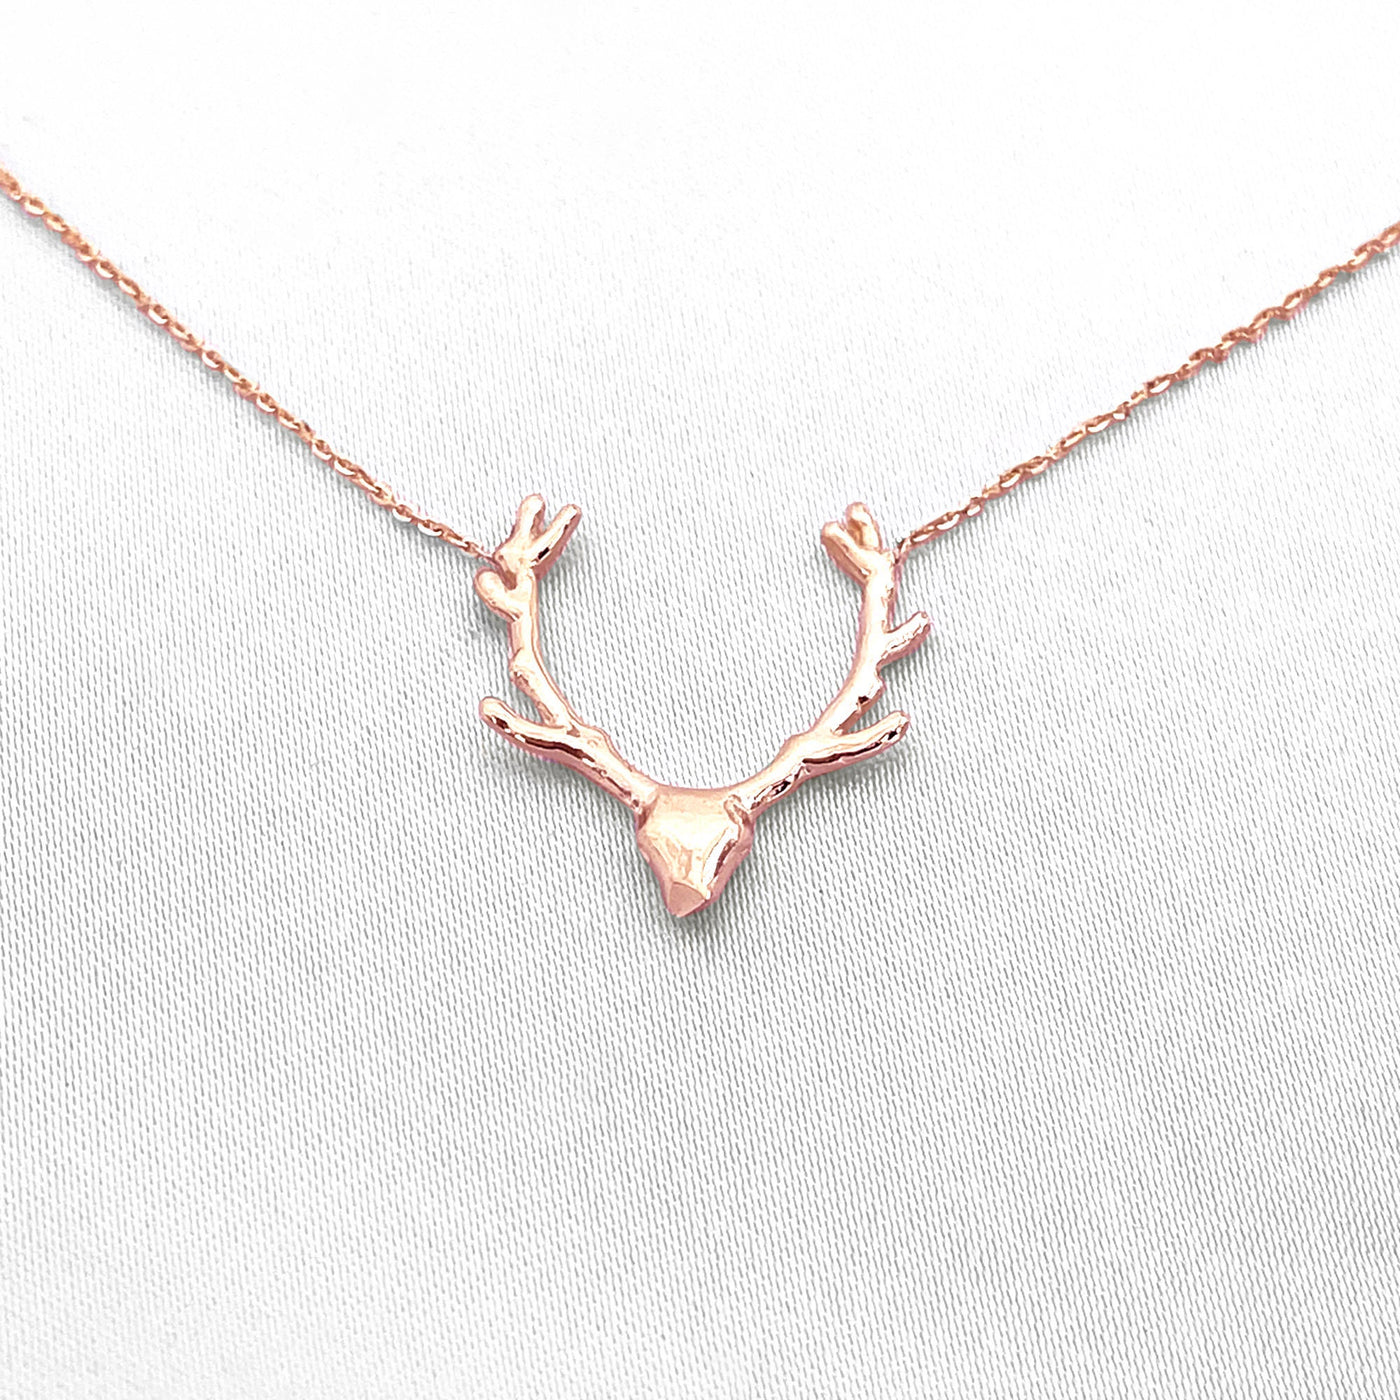 Deer Antlers Necklace